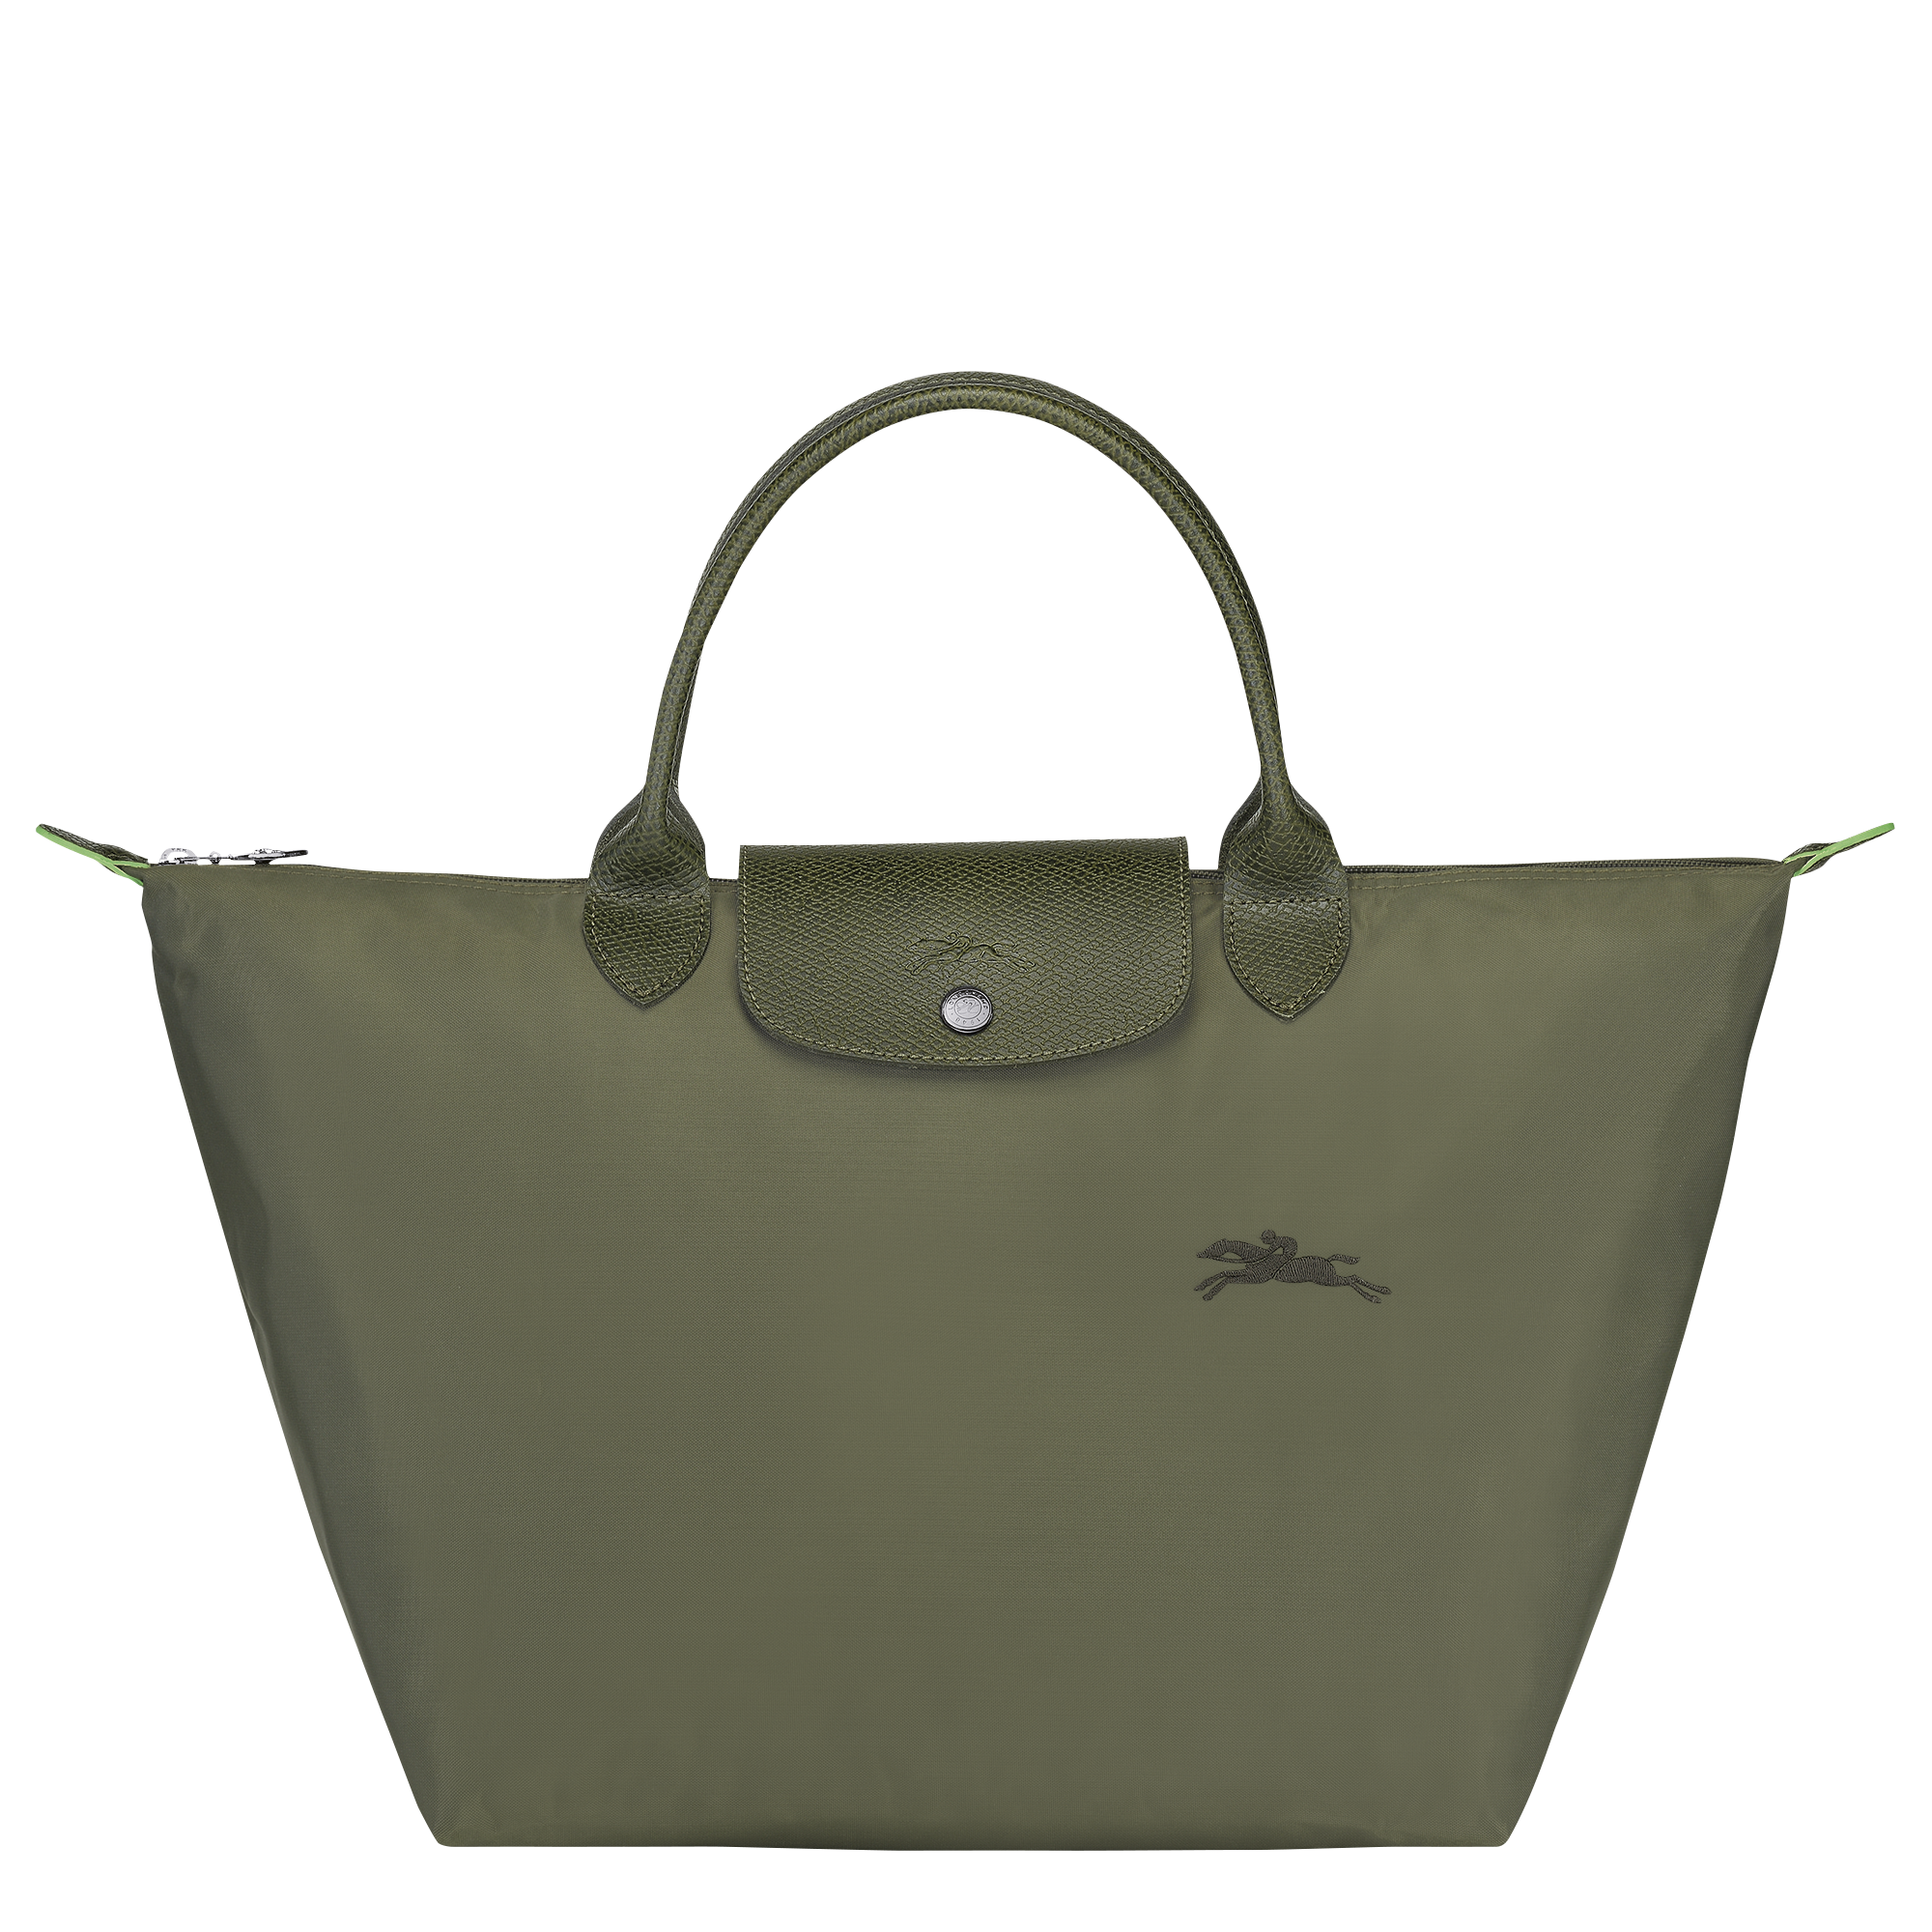 Le Pliage Green Handbag M, Forest